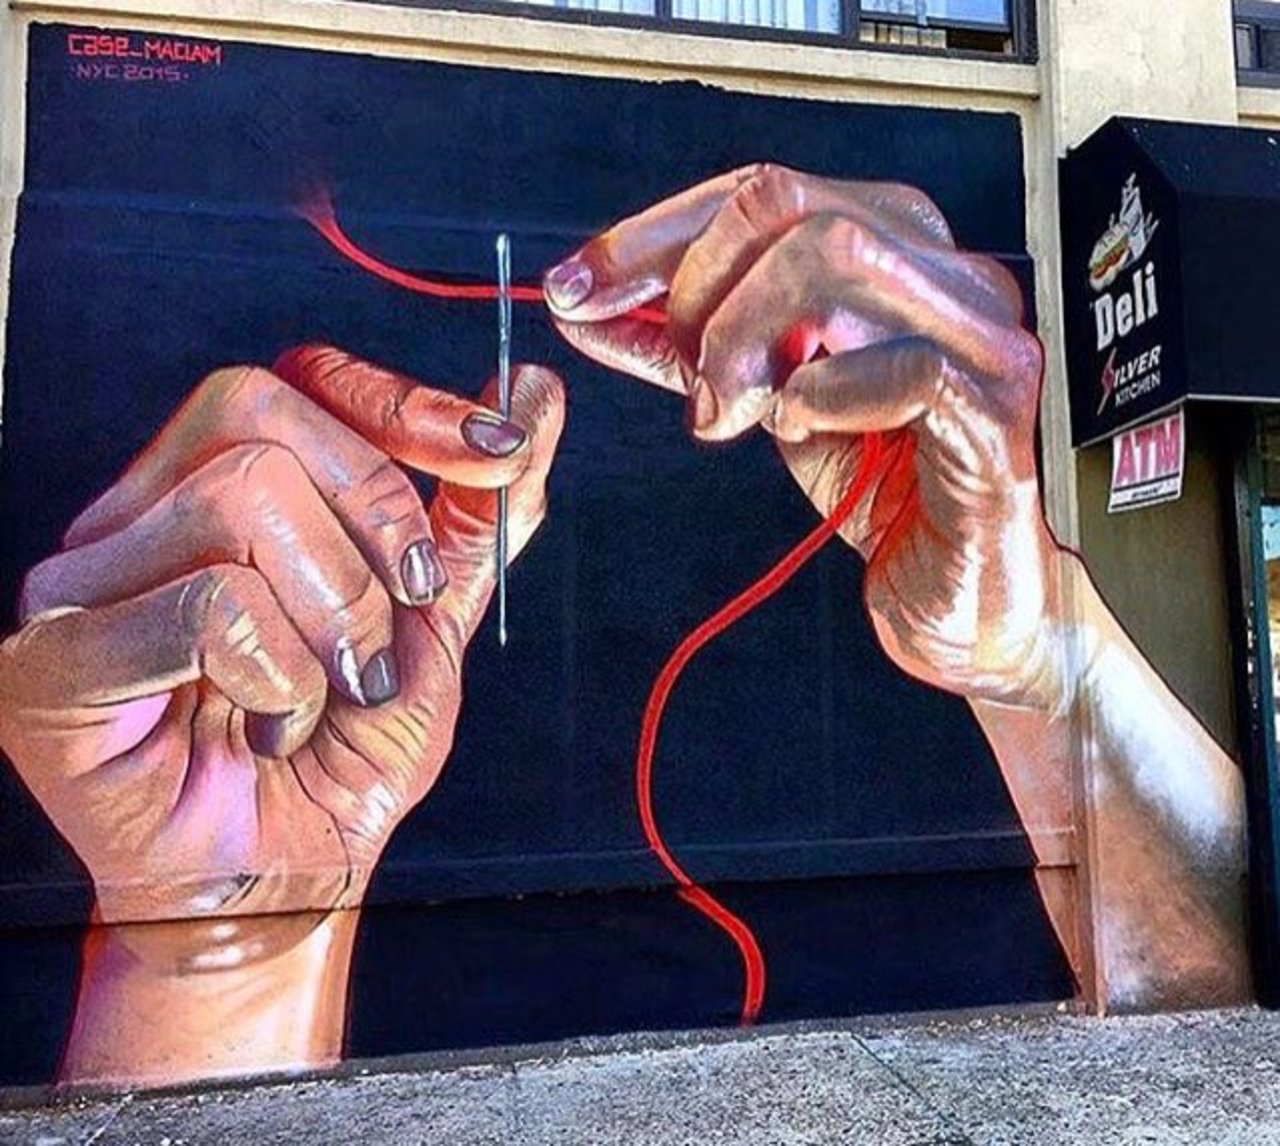 New Street Art by Case Ma'Claim in NYC 

#art #graffiti #mural #streetart https://t.co/ytcmDFnIBW